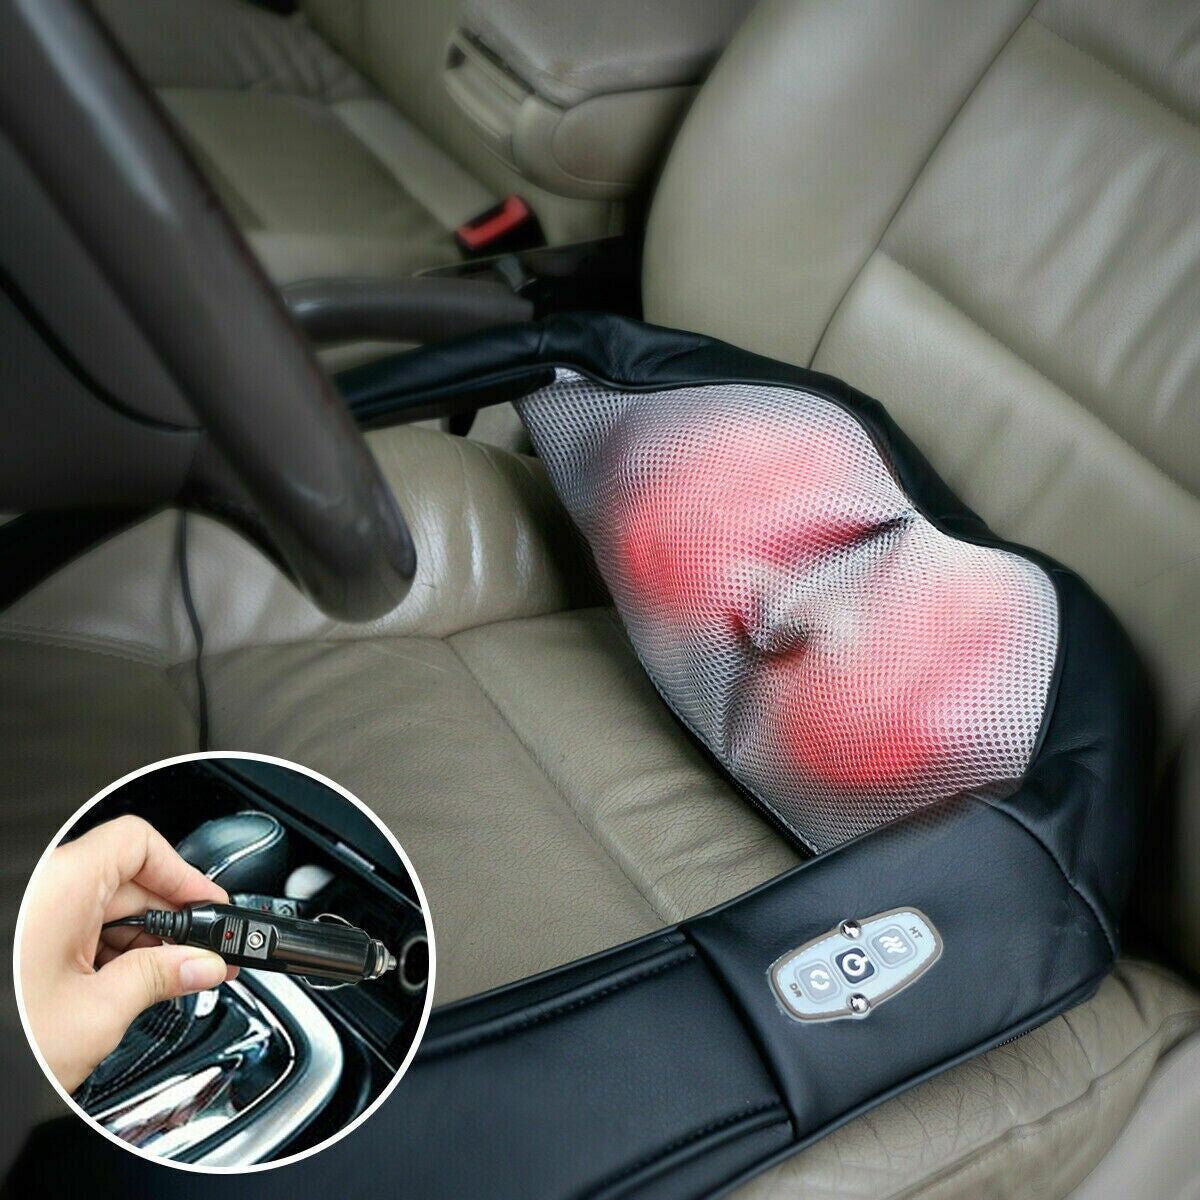 Electric Shiatsu Back Neck Shoulder Massager with Heat Kneading Body Car Home UK